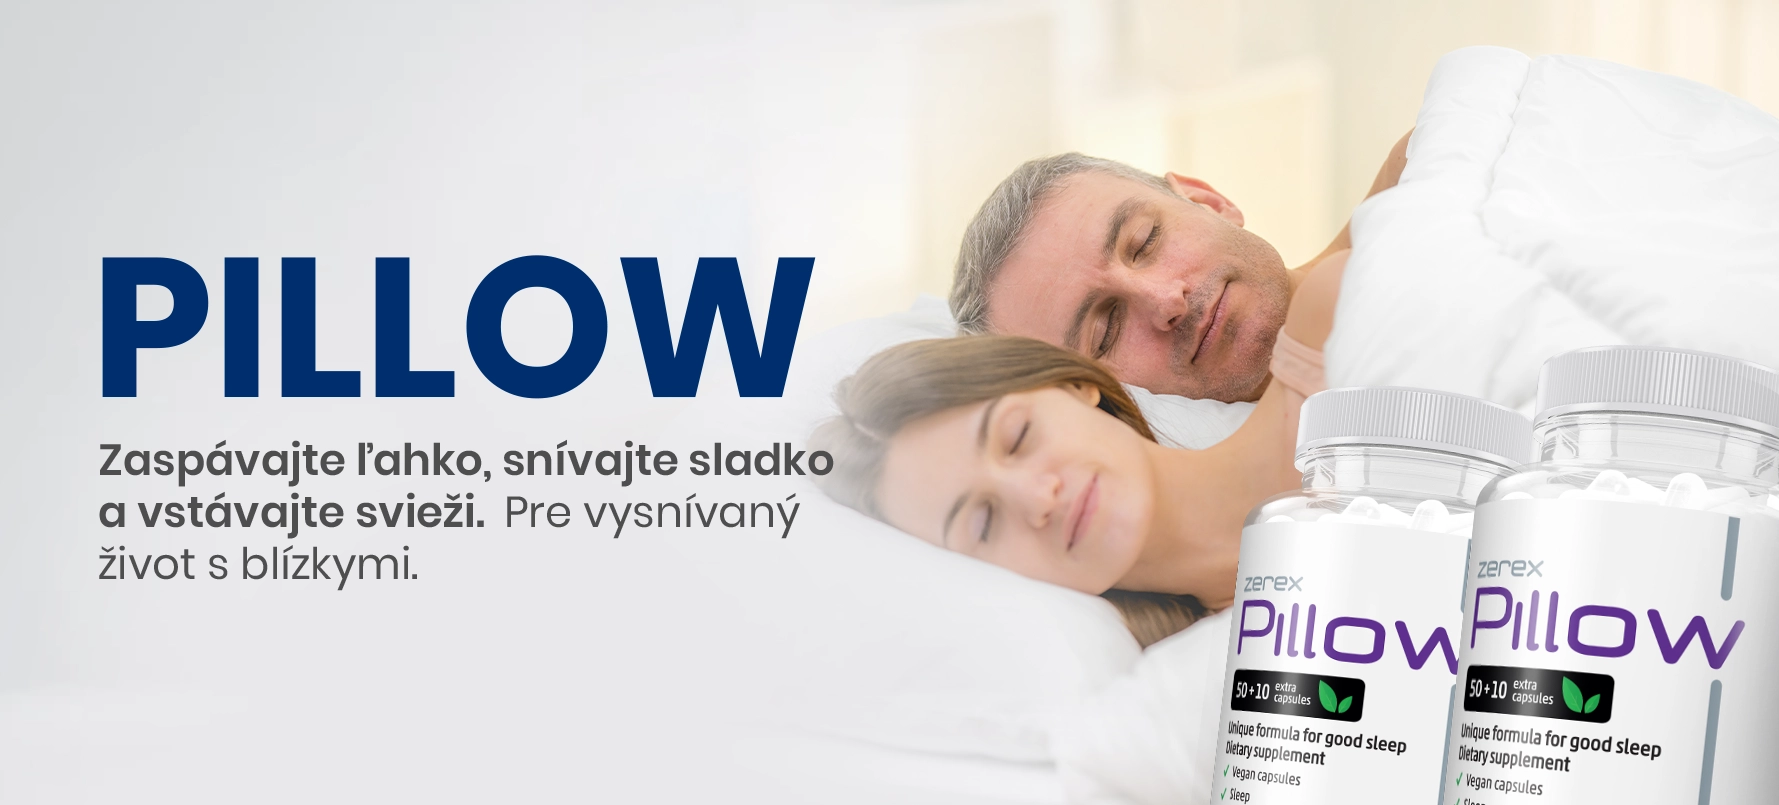 Zerex Pillow pre kvalitný spánok